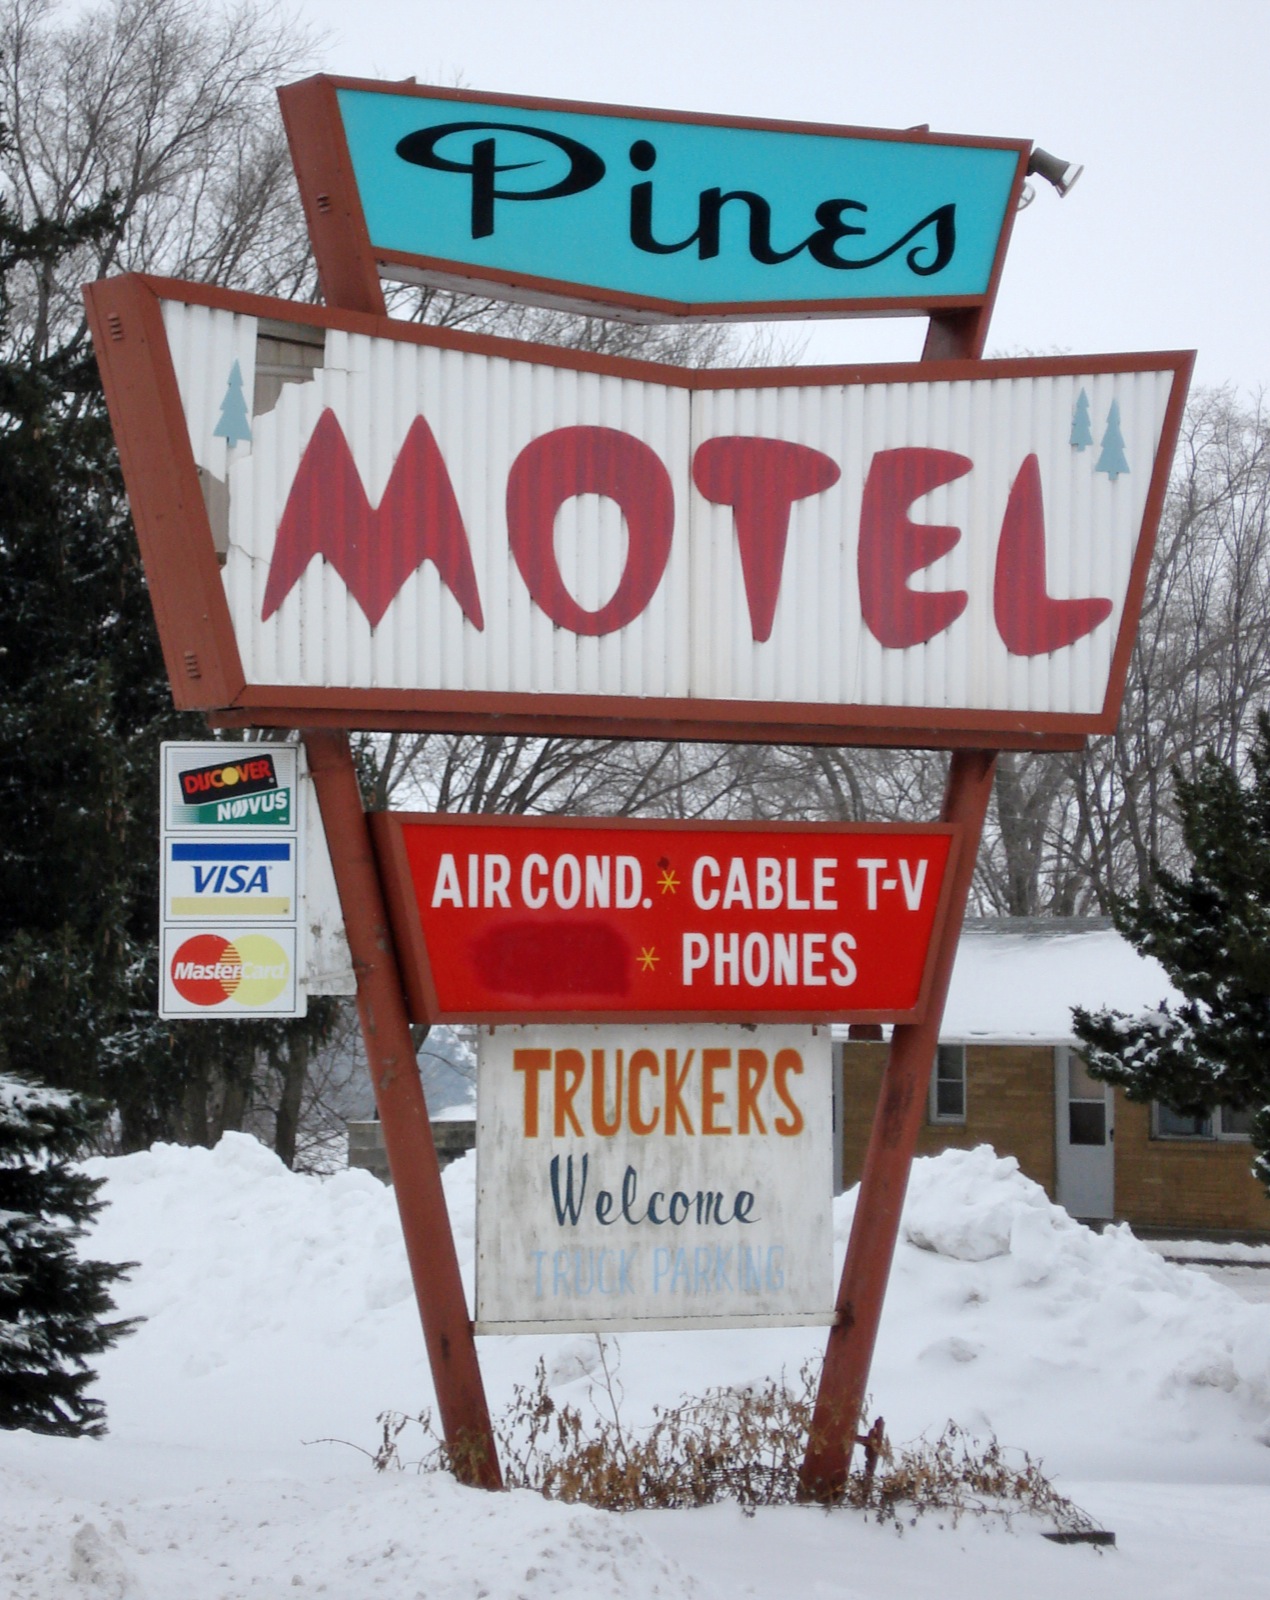 Pines Motel - 12458 U.S. 18, Postville, Iowa U.S.A. - December 29, 2007